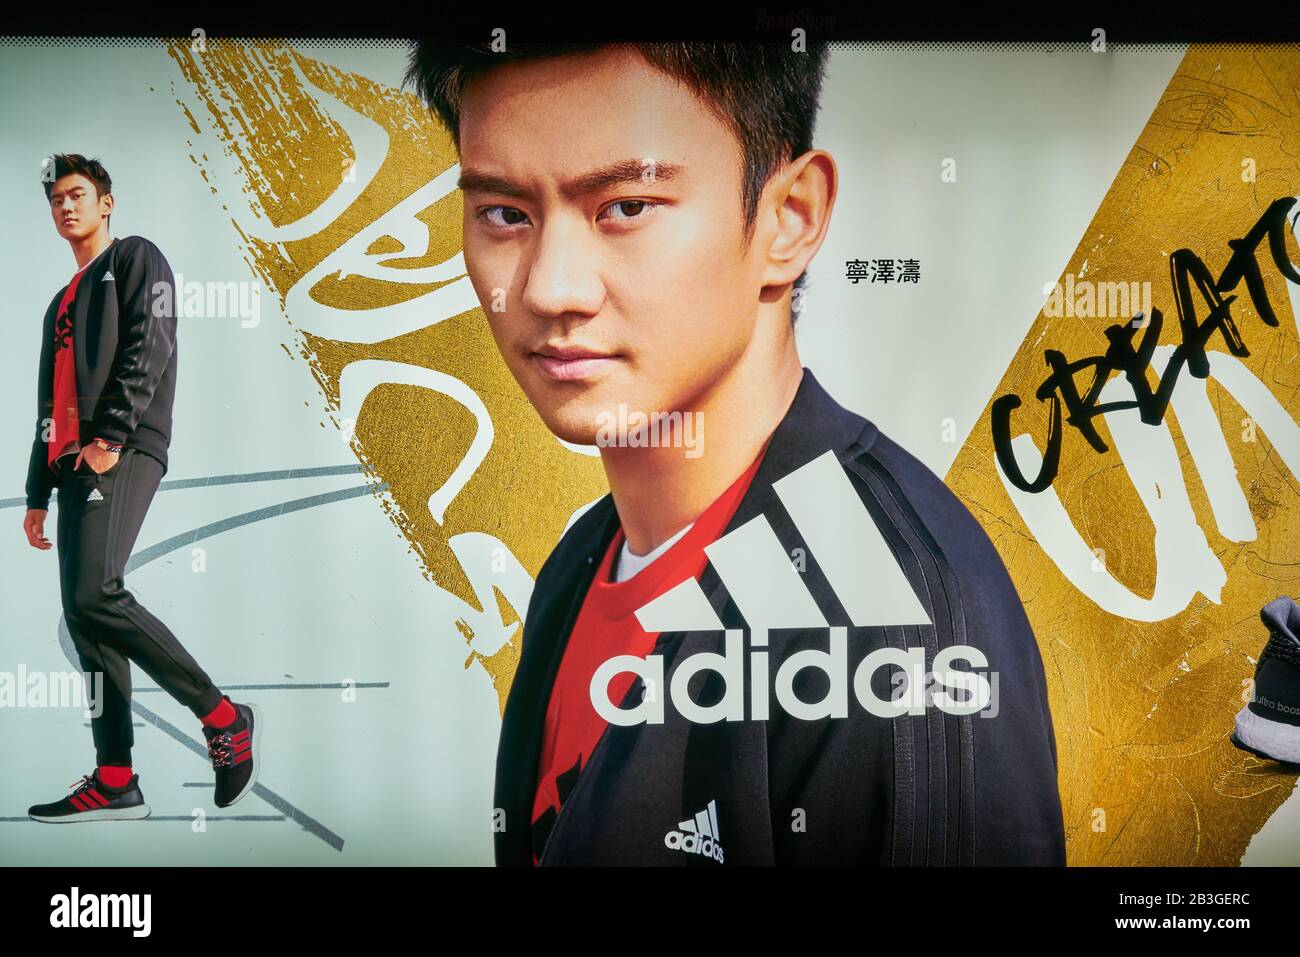 Hong KONG, CHINA - 23 DE ENERO de 2019: Primer plano del cartel publicitario  de Adidas visto en Hong Kong Fotografía de stock - Alamy